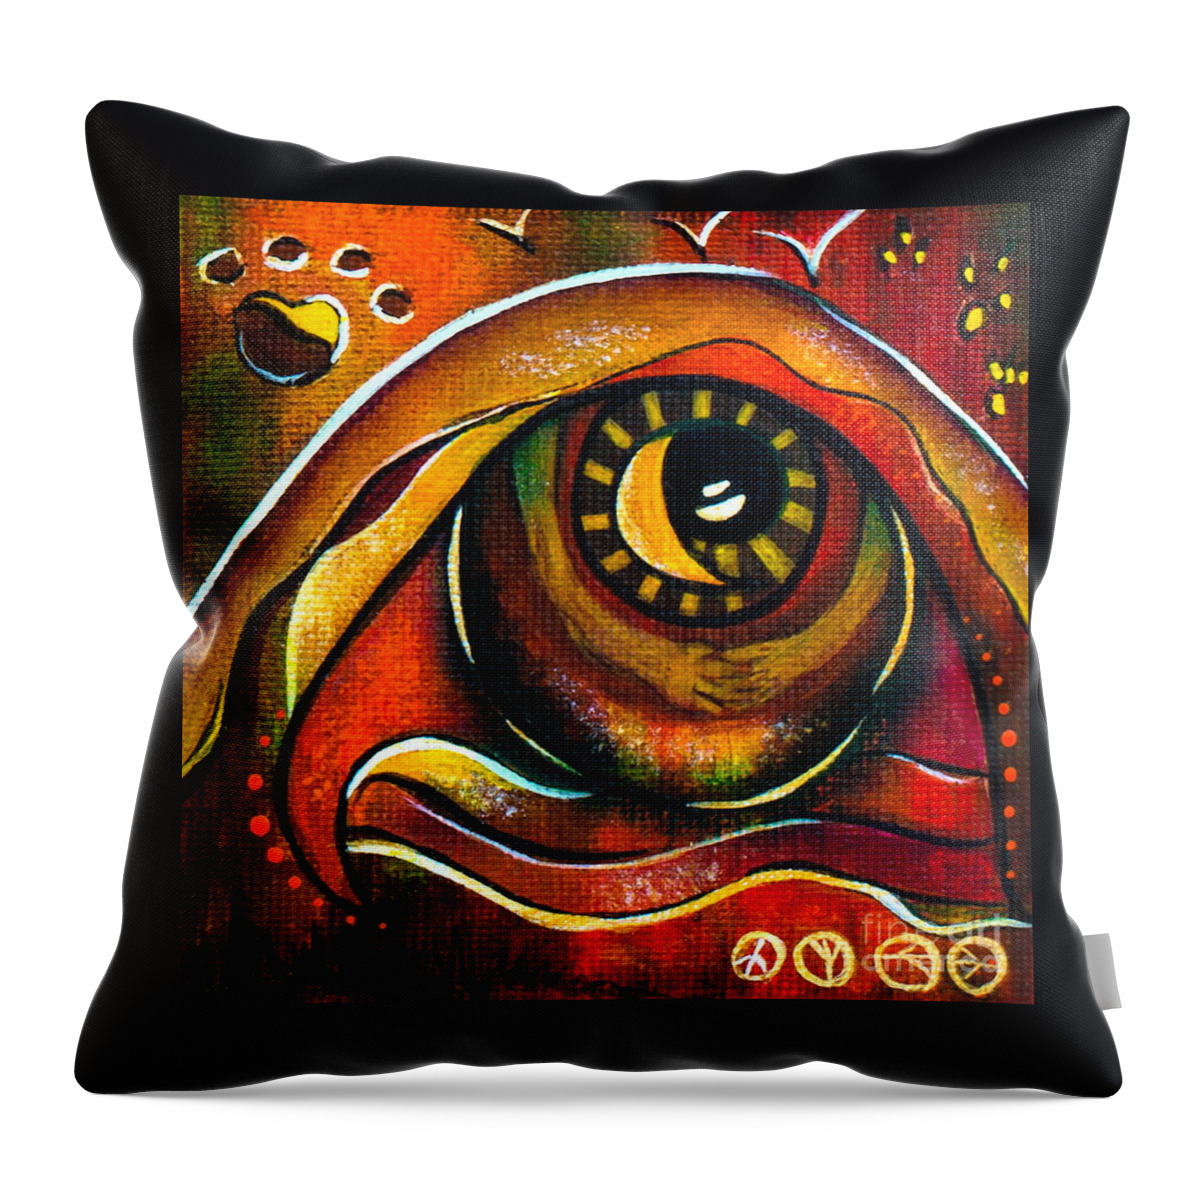  Throw Pillow featuring the painting Elementals Spirit Eye by Deborha Kerr